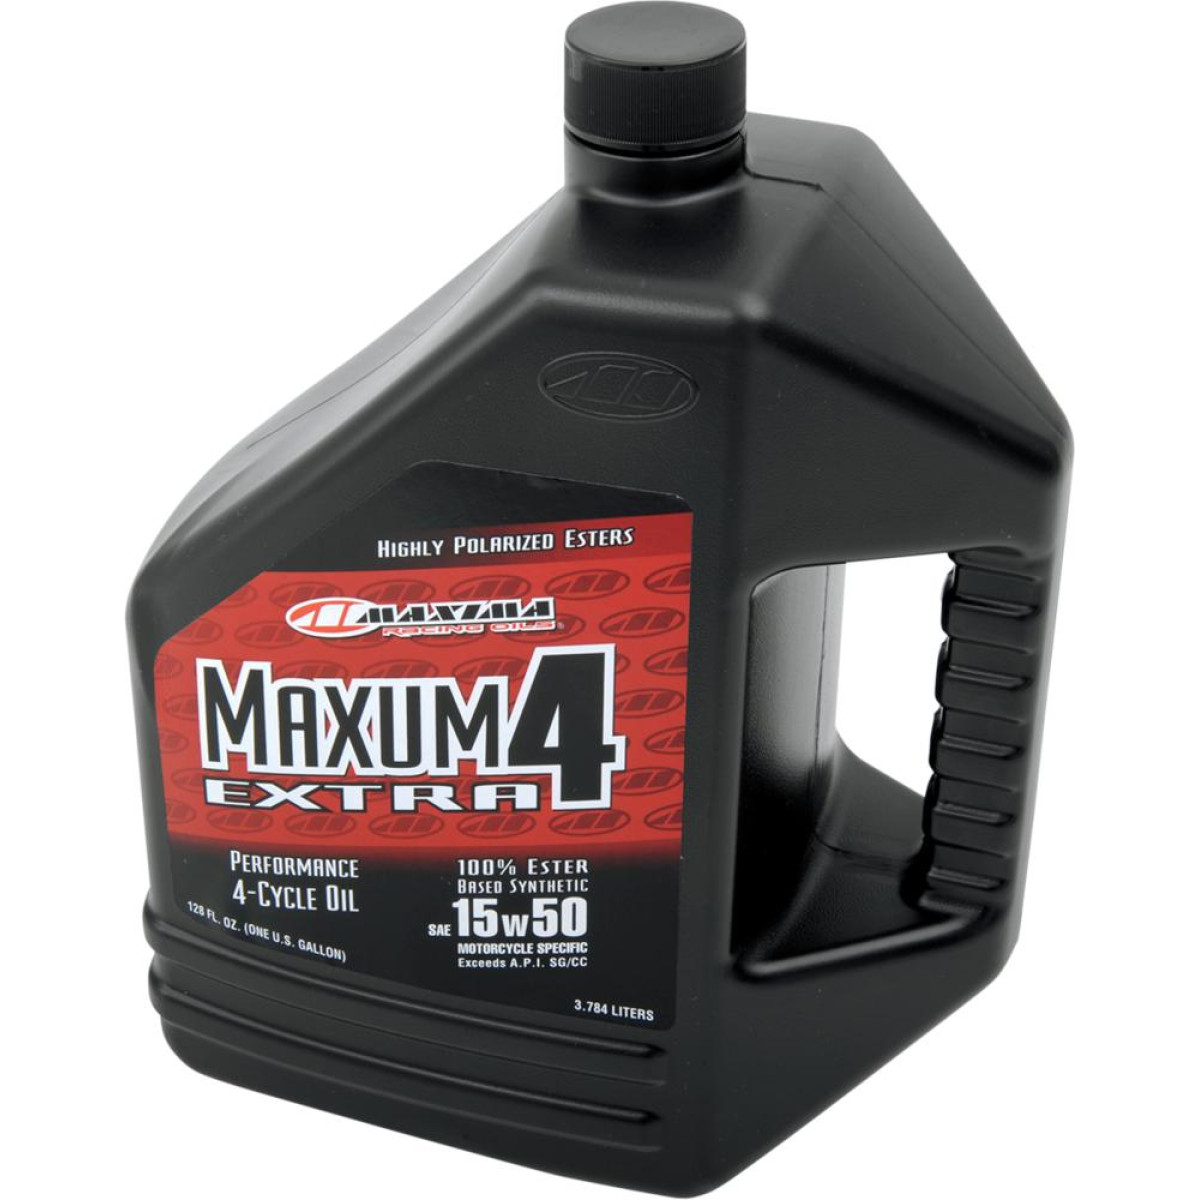 MAXIMA Huile Moteur 4 Extra 15W50, 3.78 Liter